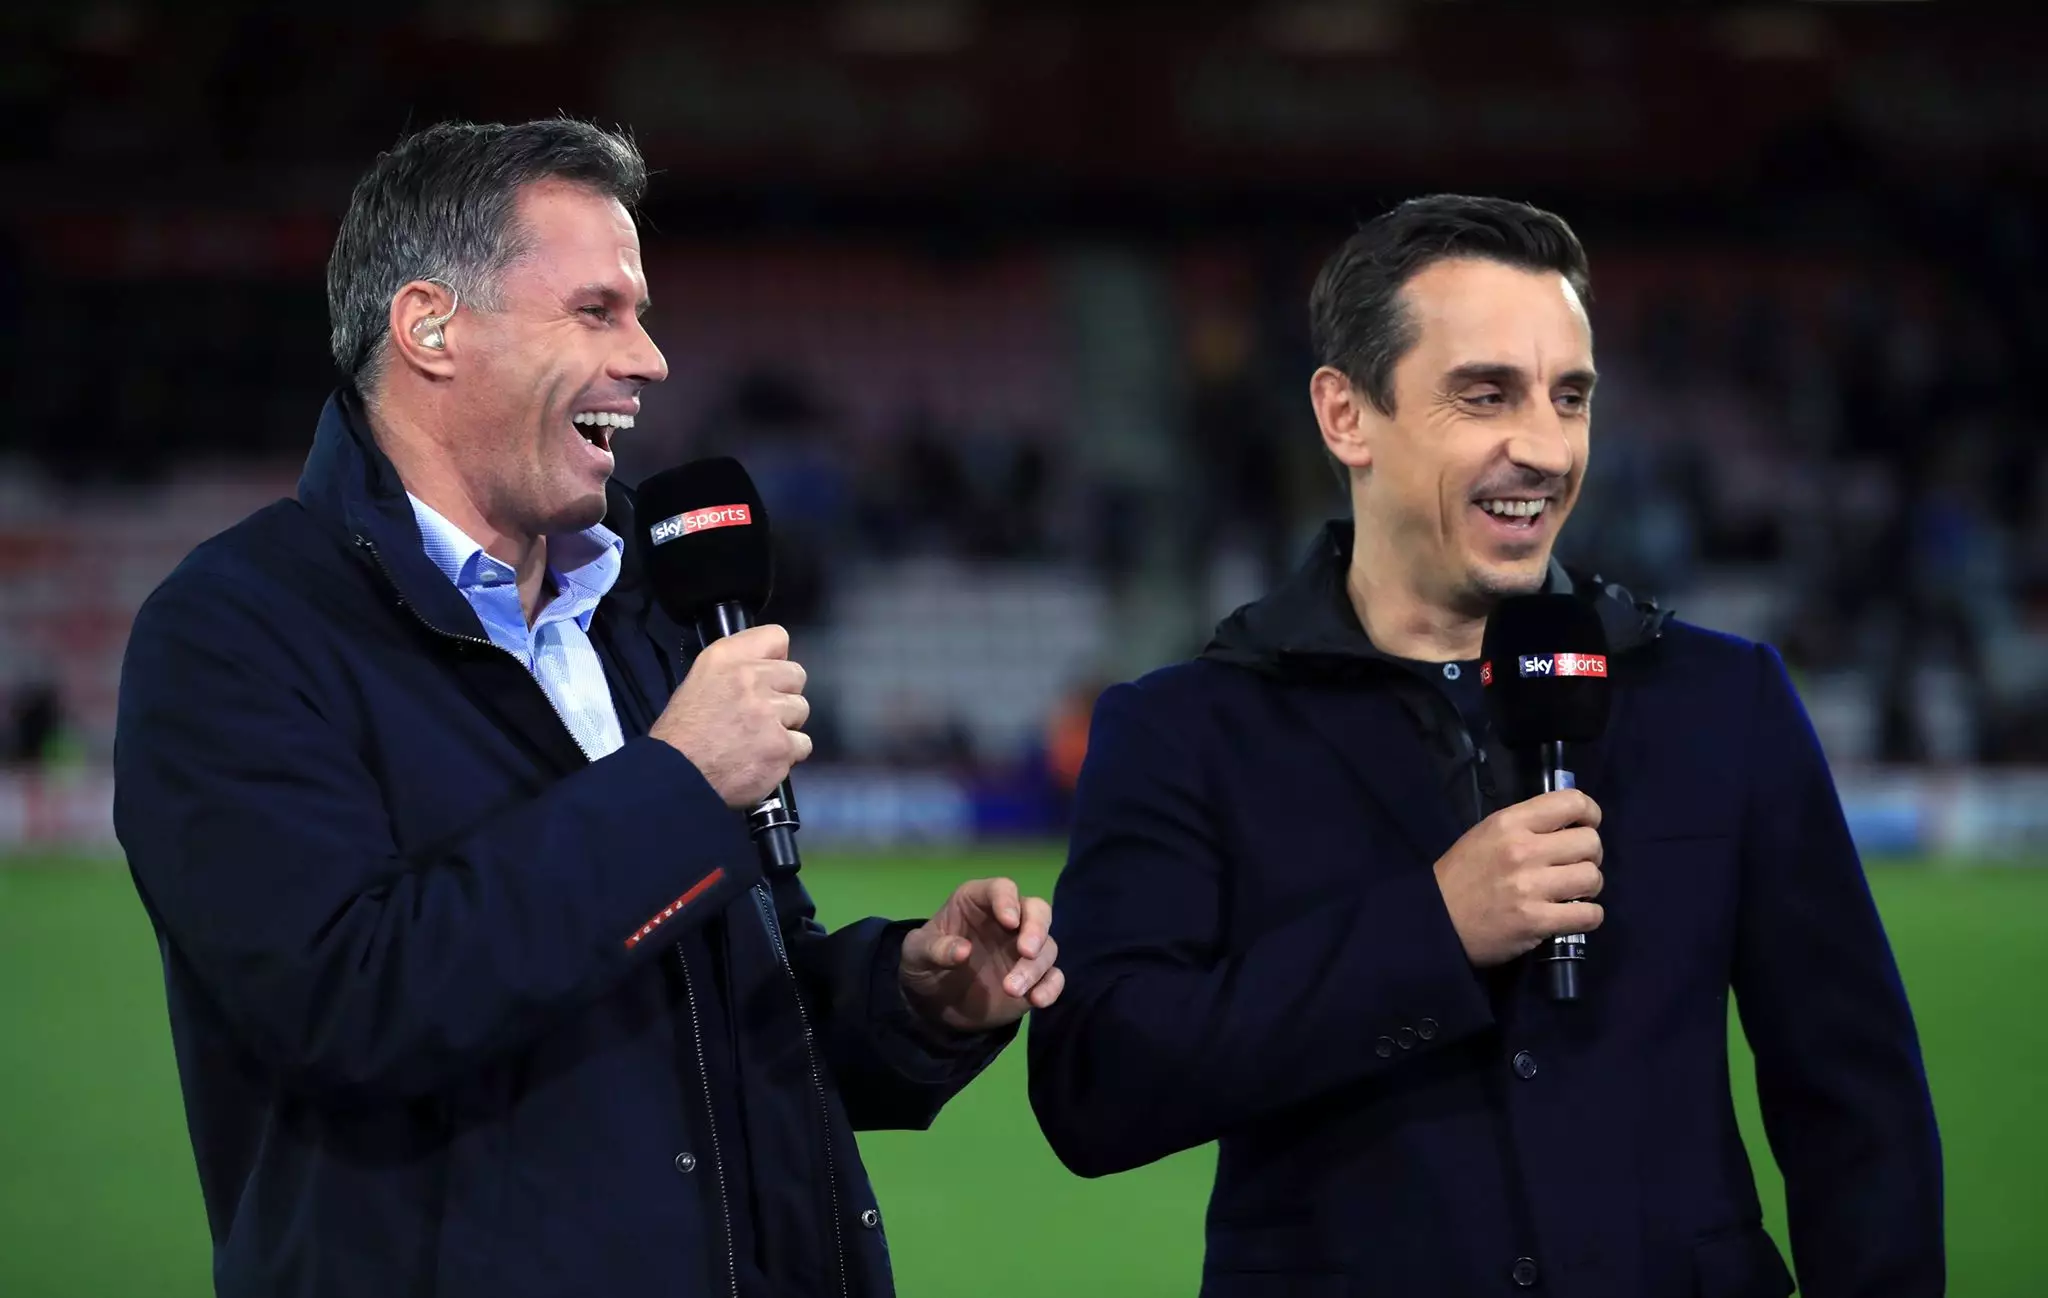 Neville and Carragher on Sky Sports duty earlier in the Premier League season. Image: PA